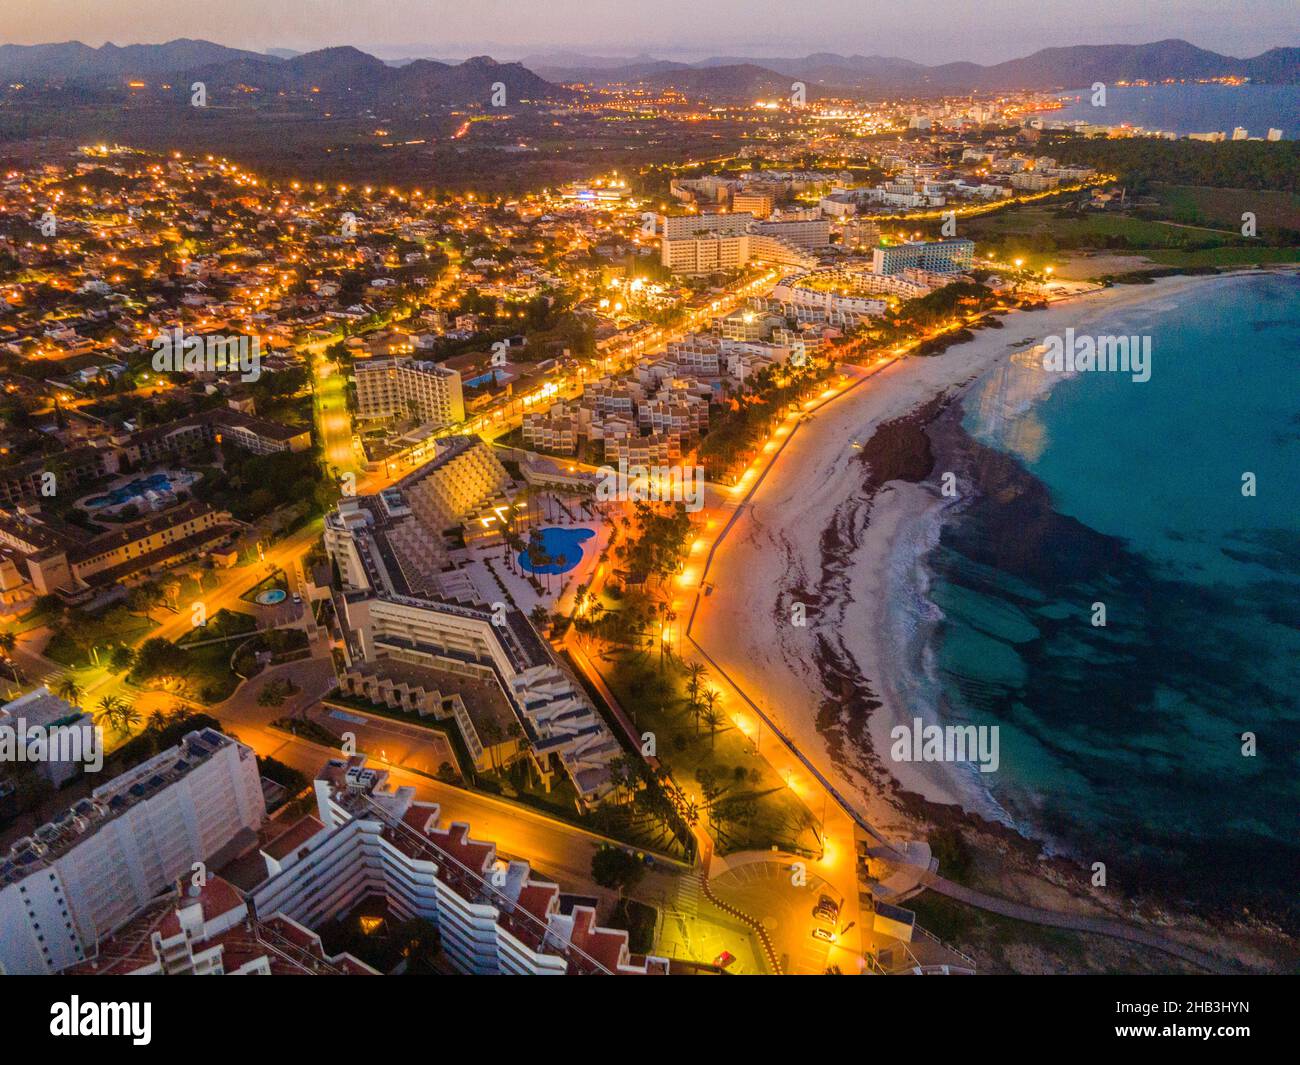 Sa Coma, S'Illot, Mallorca, Spain evening photos from Drone. Aerial imagery of Mallorca Island! Stock Photo